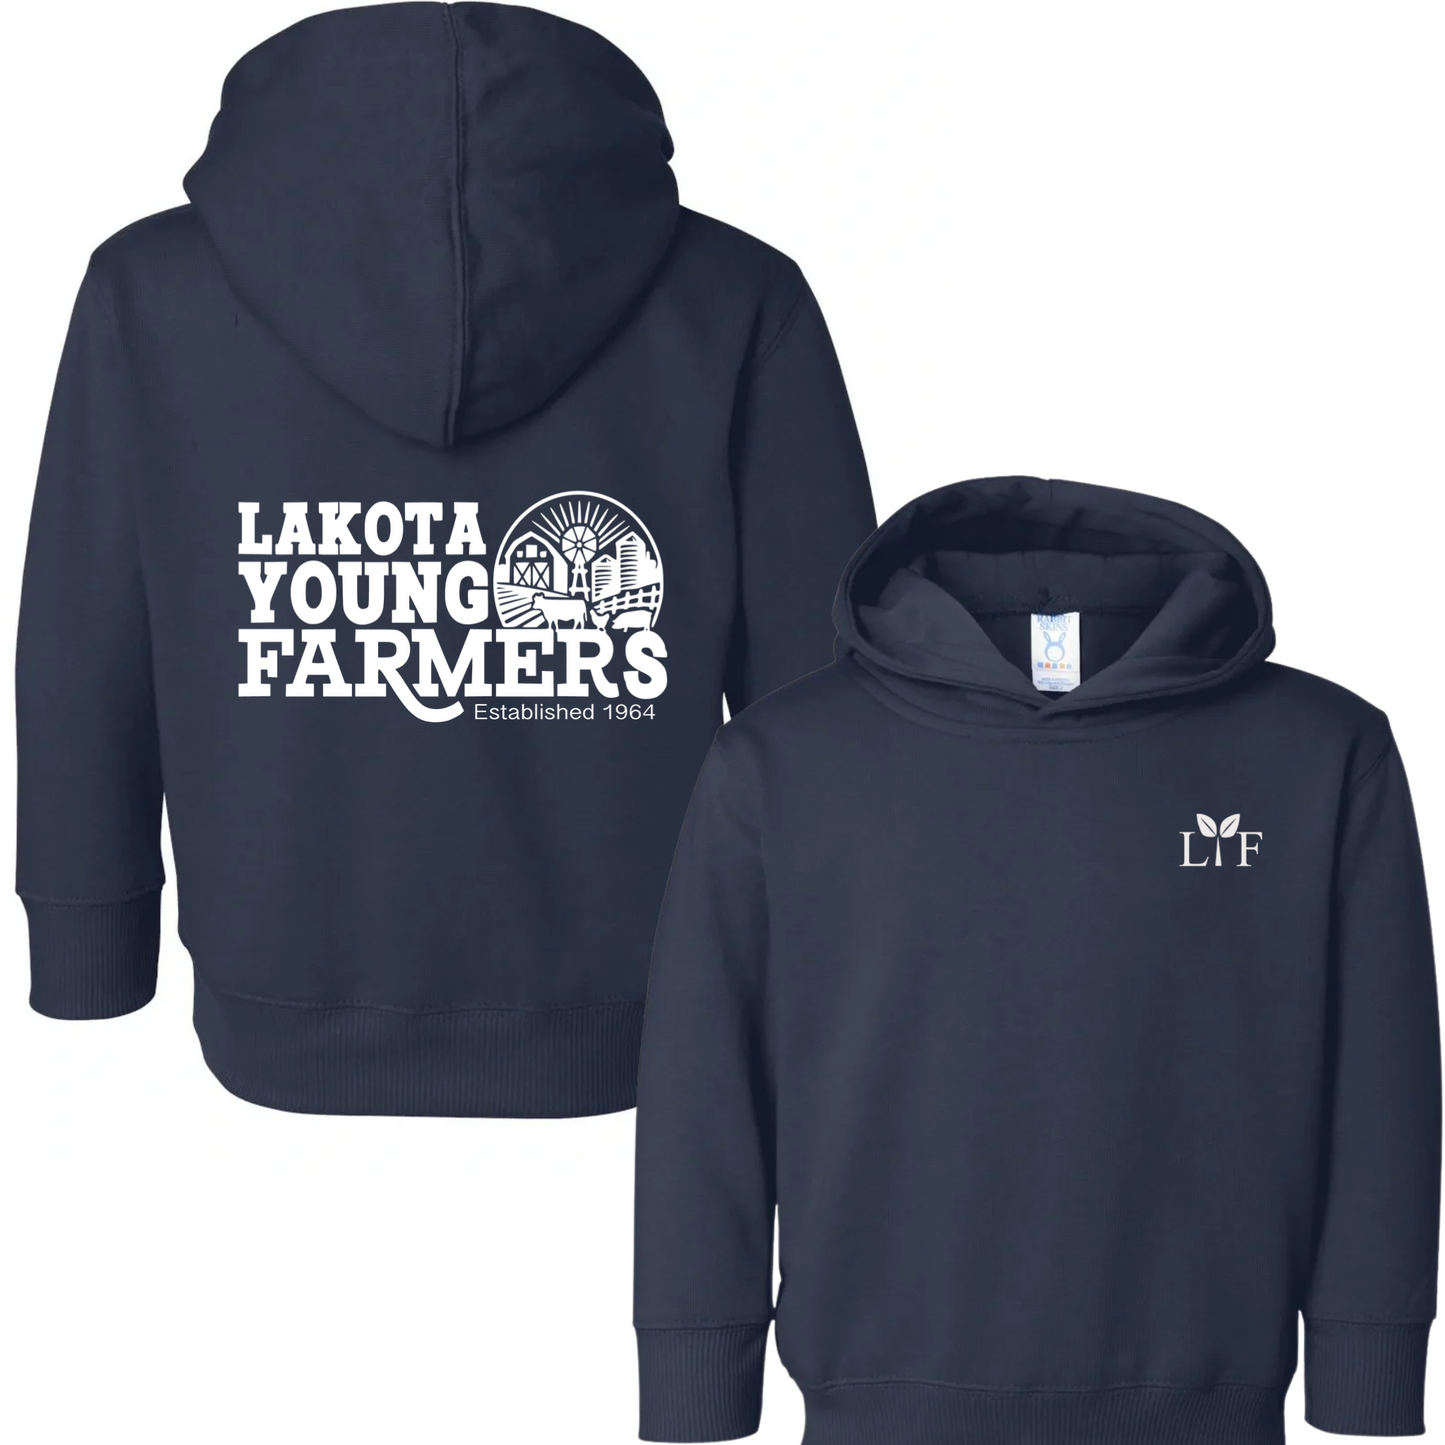 Lakota Young Farmers Toddler Size Hoodies and Sweatshirts